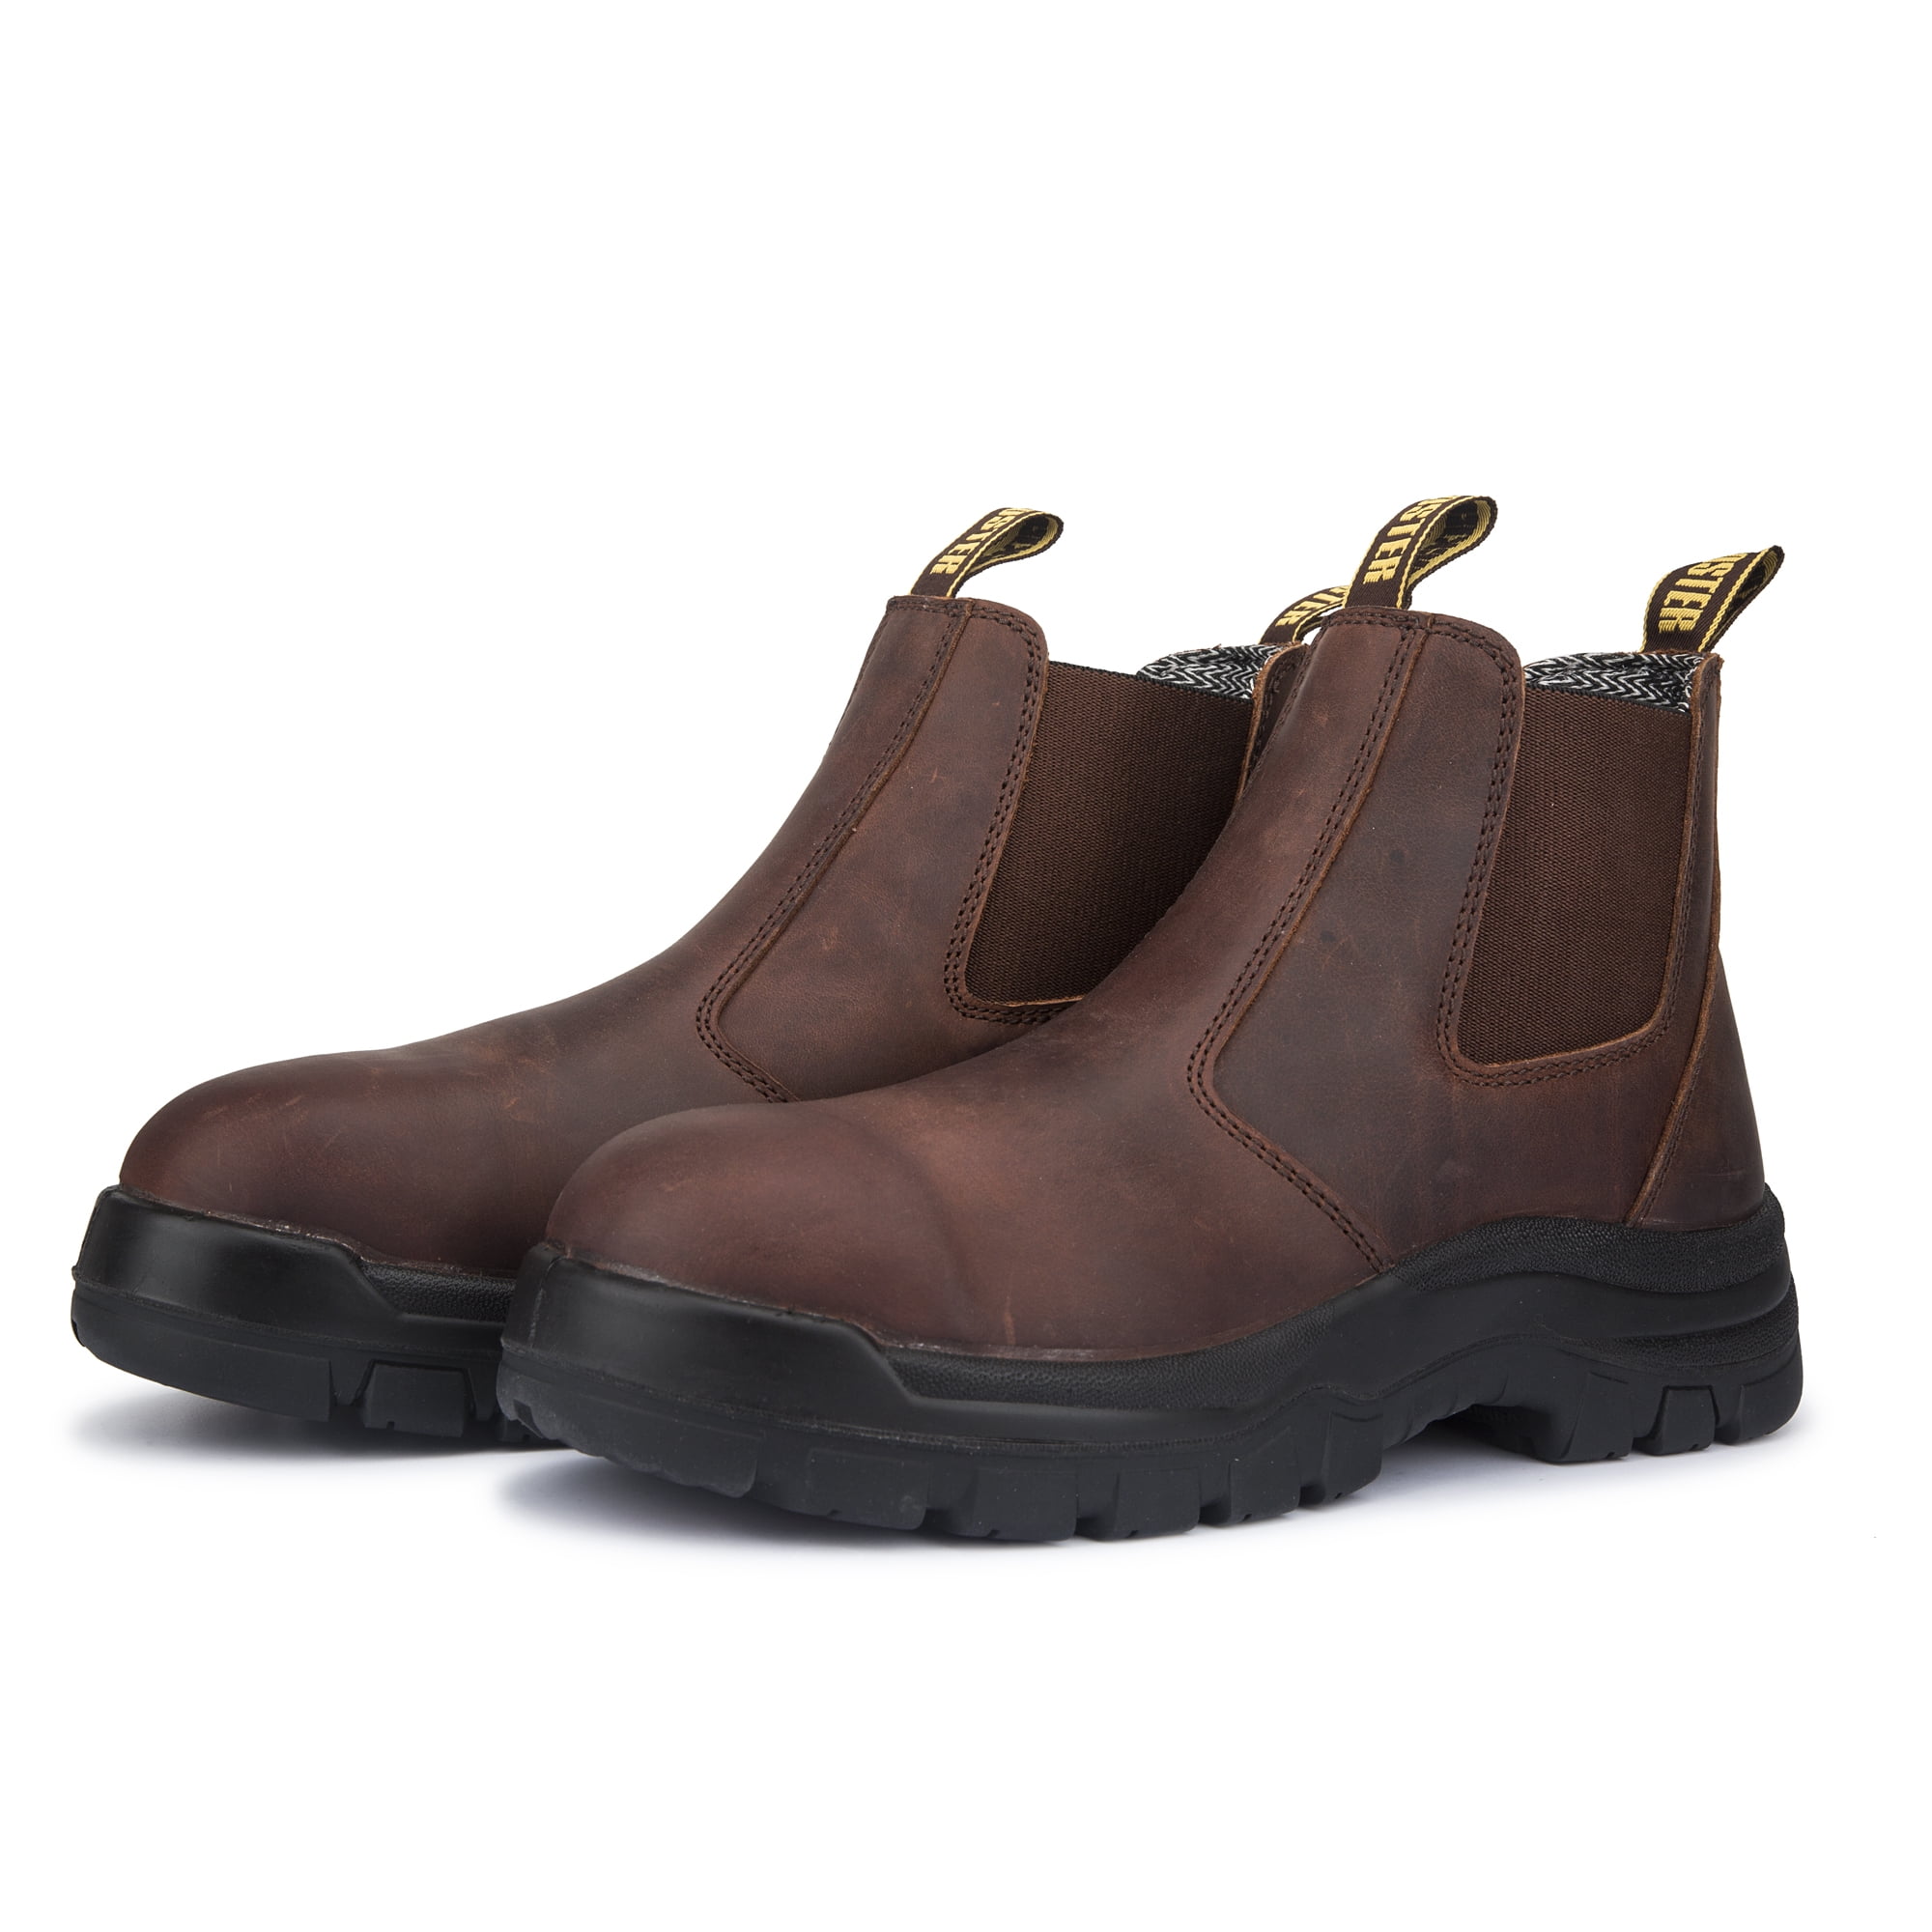 6 inch Black Soft Toe Waterproof EH Protective Slip On Work Boots ASTM F2892 Standard AK303 ROCKROOSTER Men's Chelsea Boots 